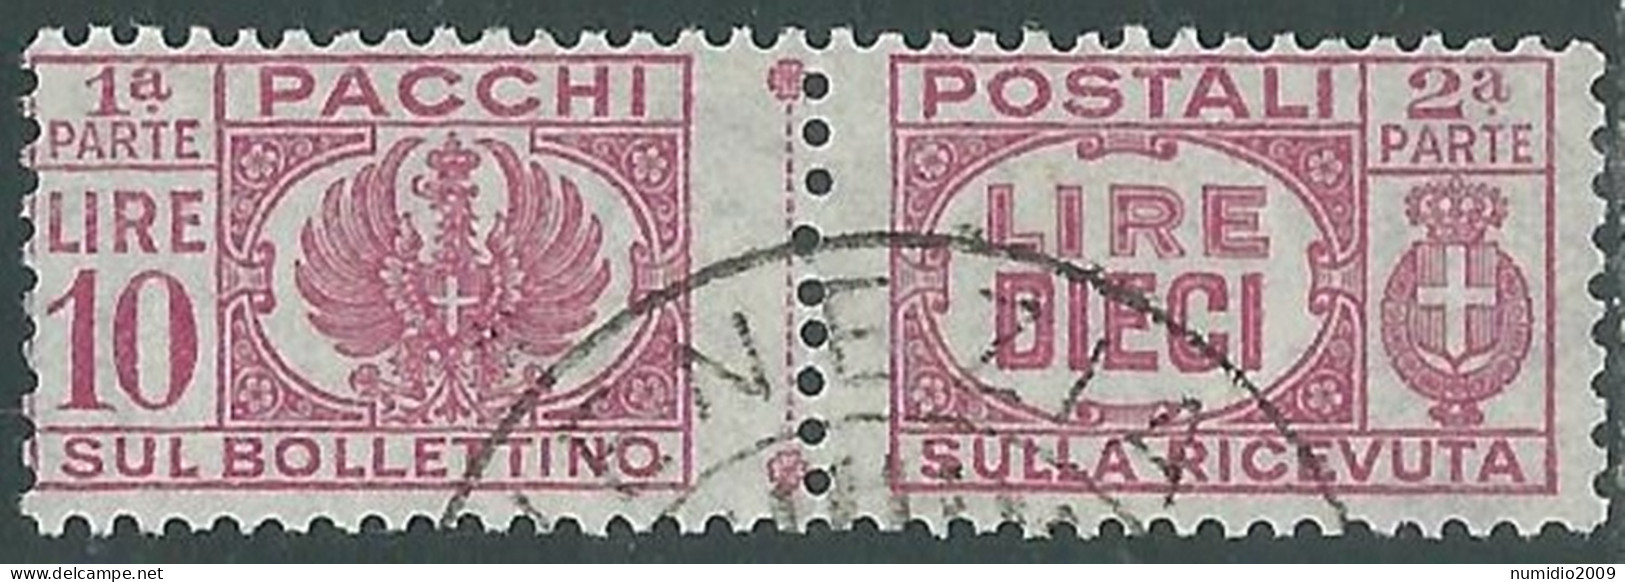 1946 LUOGOTENENZA PACCHI POSTALI USATO 10 LIRE - P31-10 - Pacchi Postali